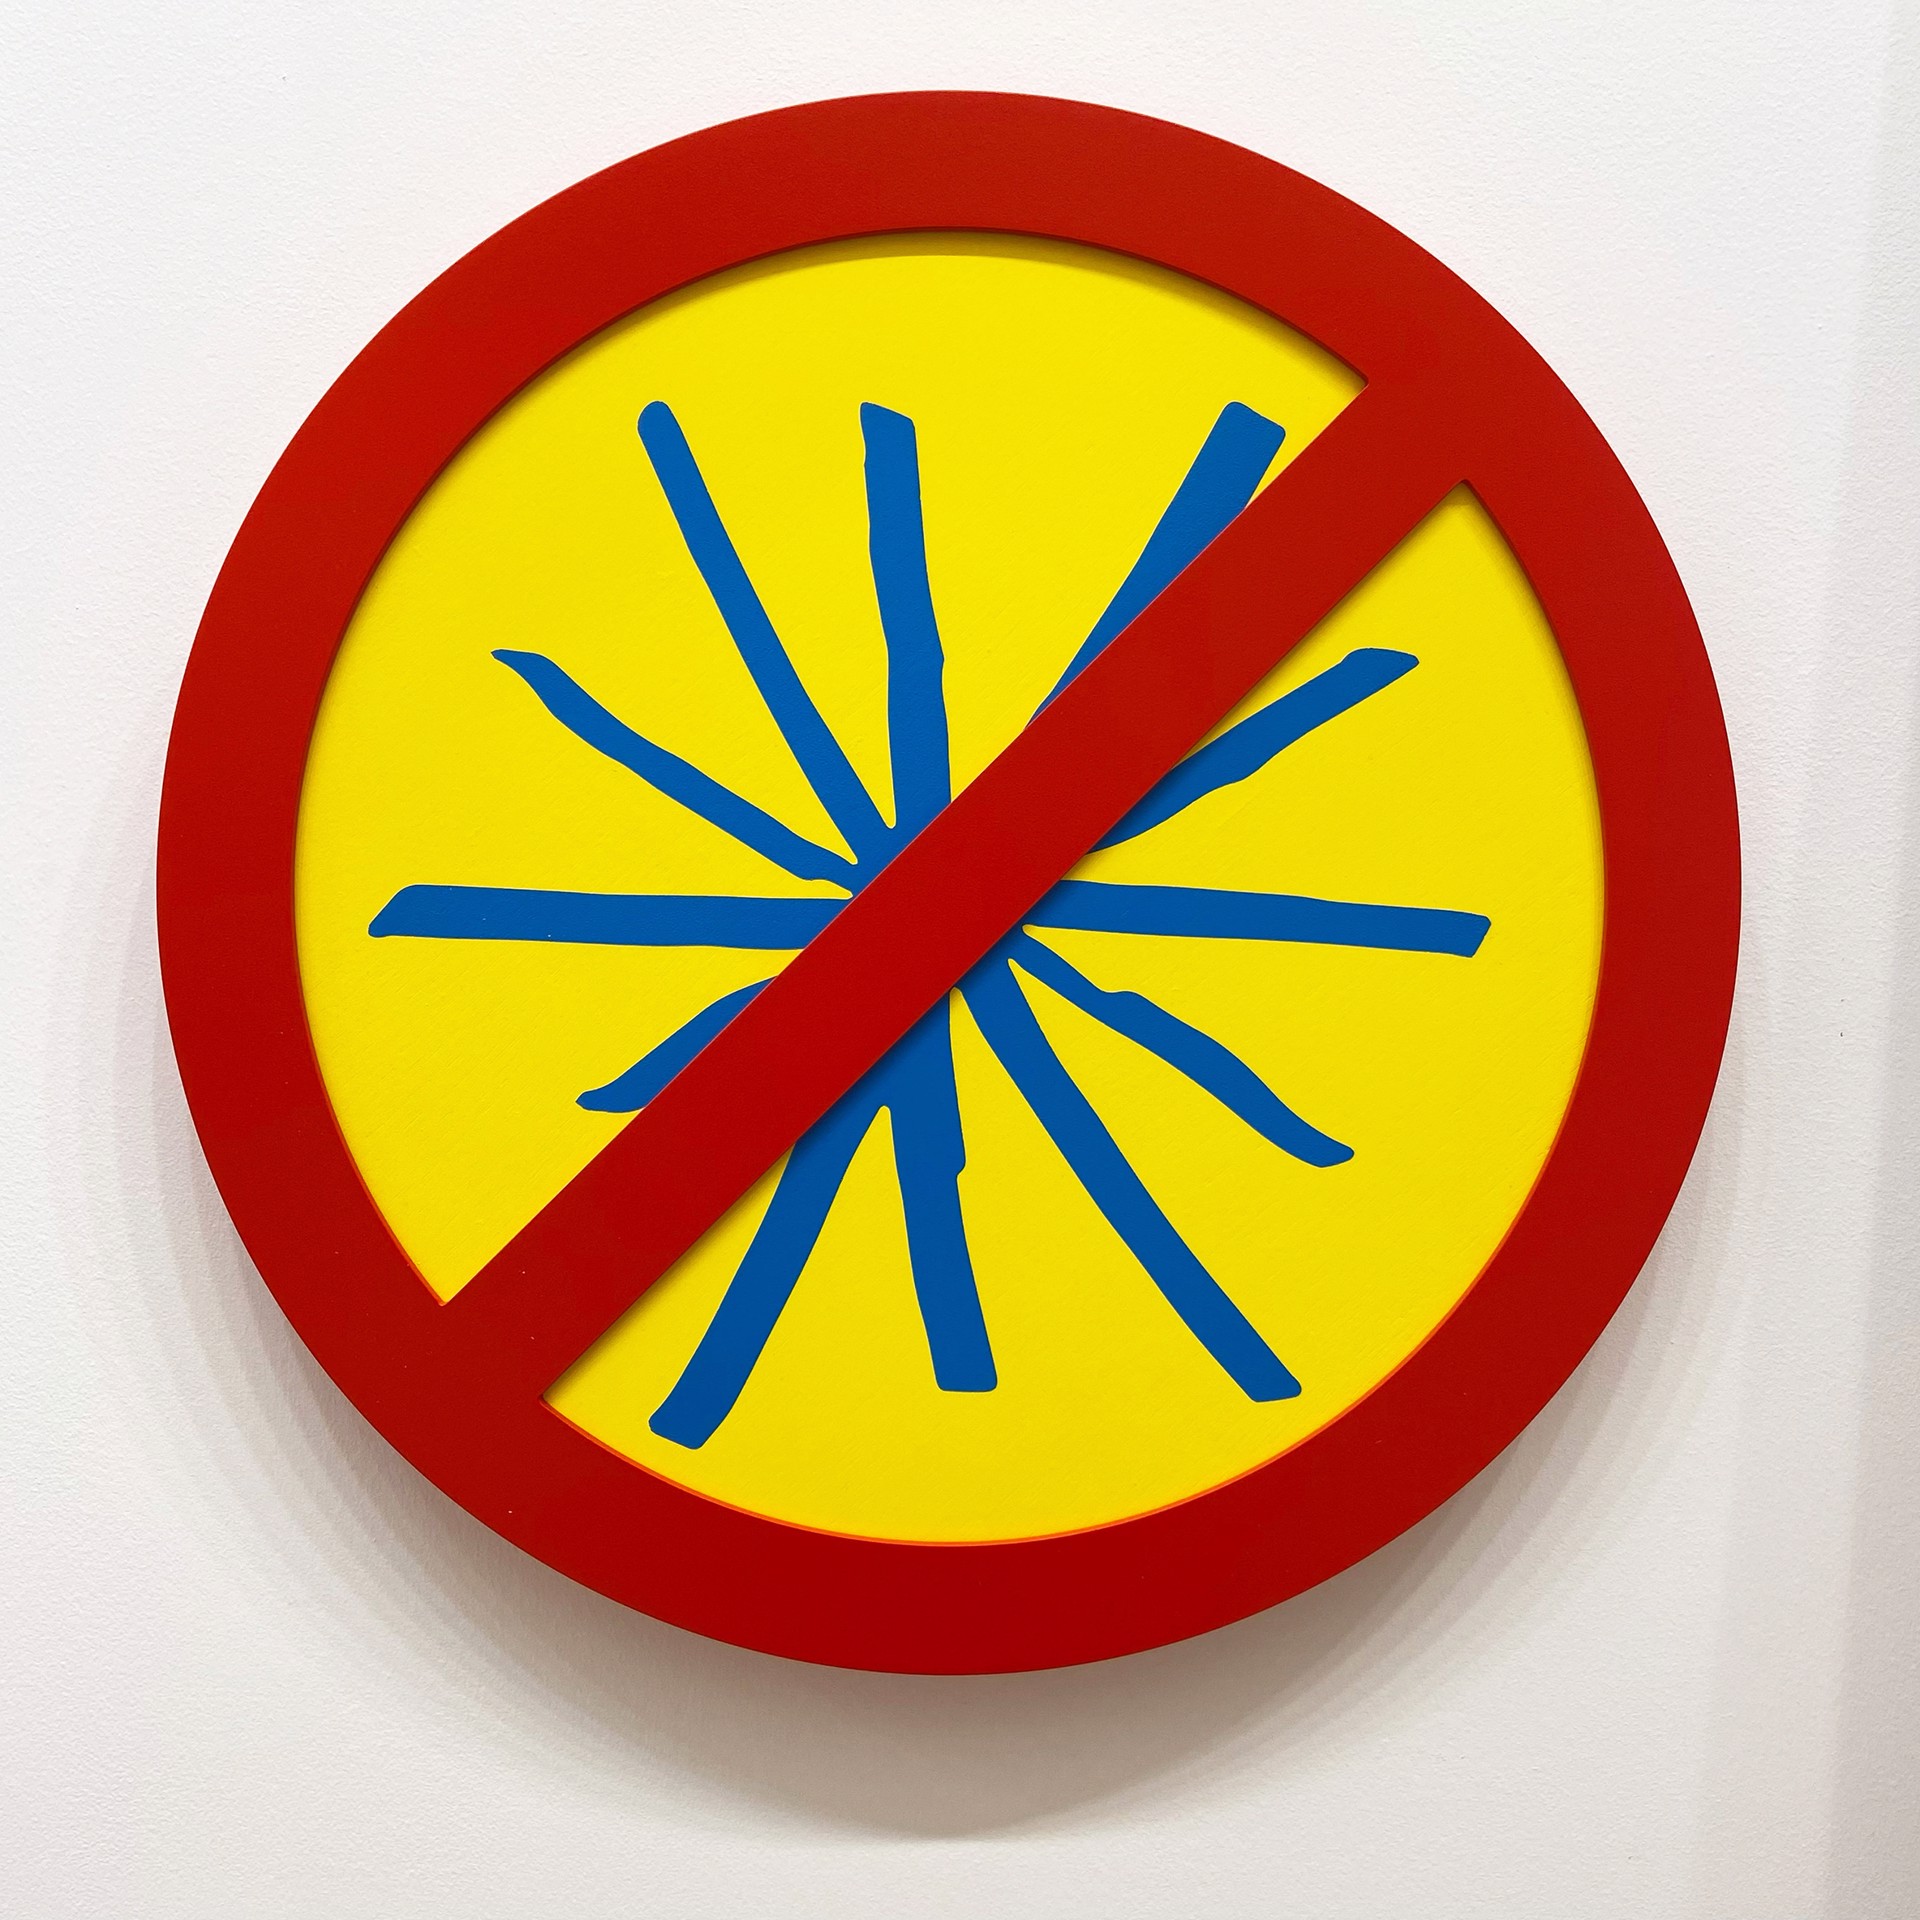 No Assholes (Blue on Yellow) by Michael Porten